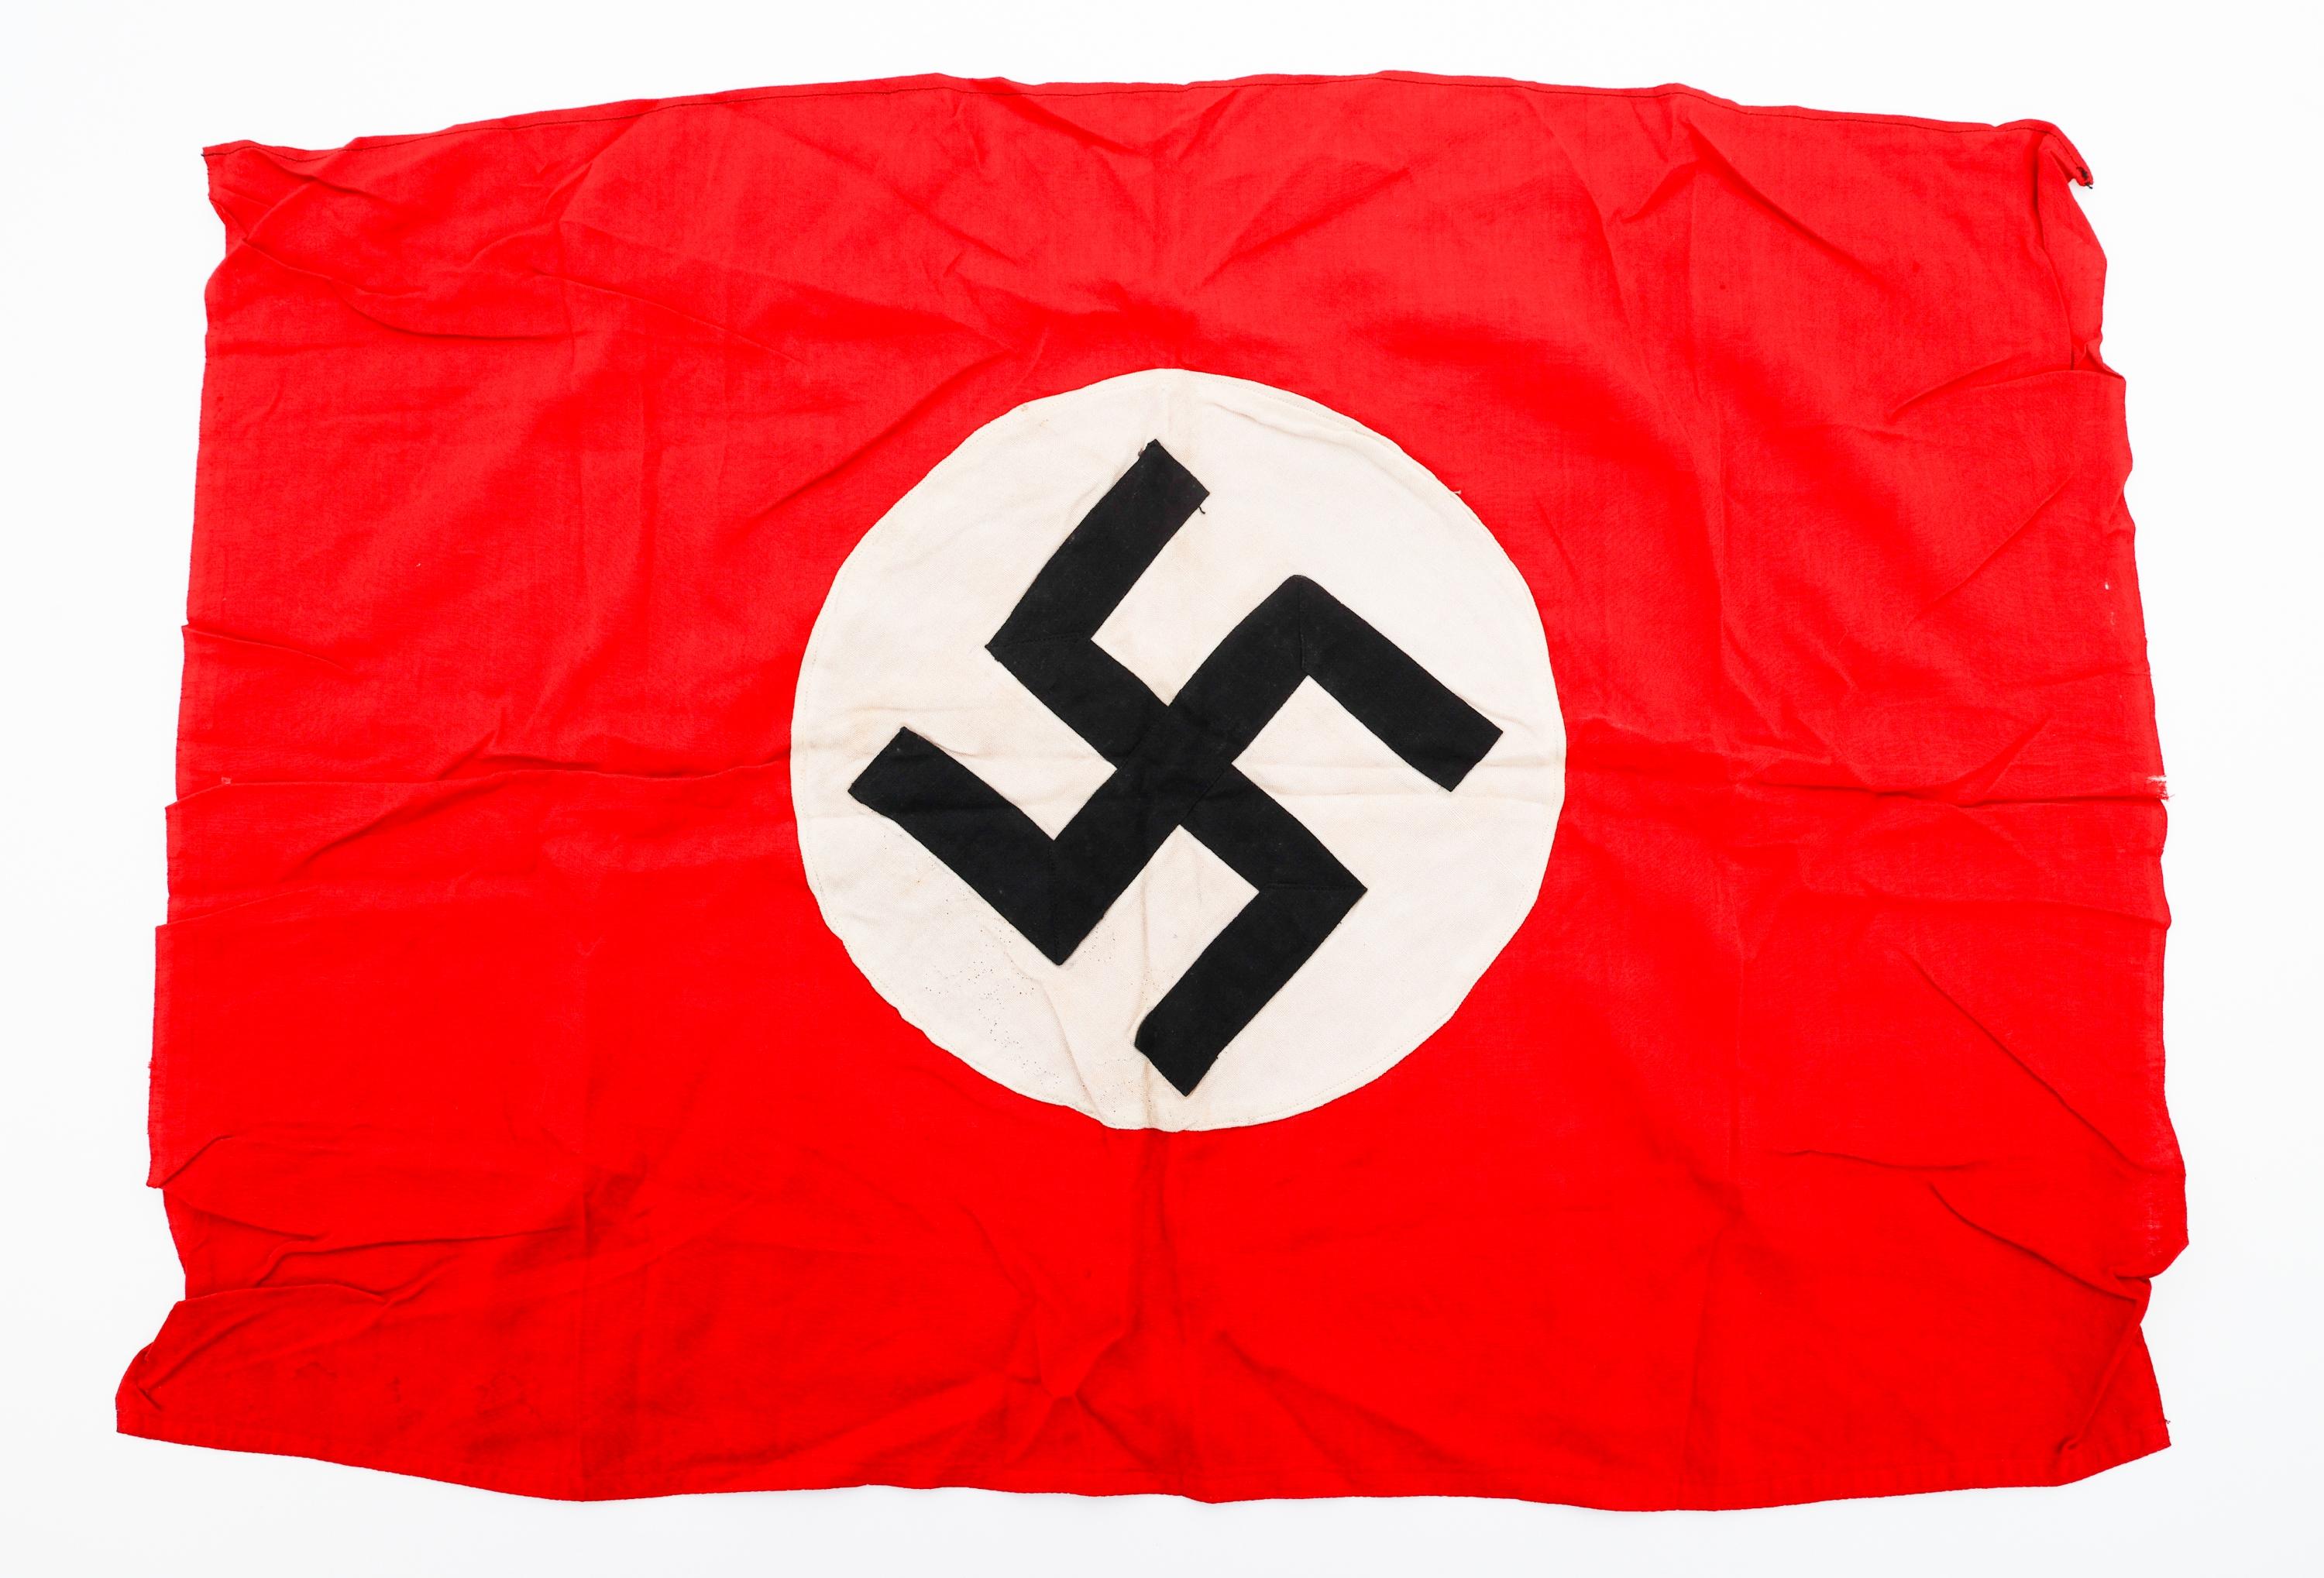 WWII GERMAN NSDAP FLAG